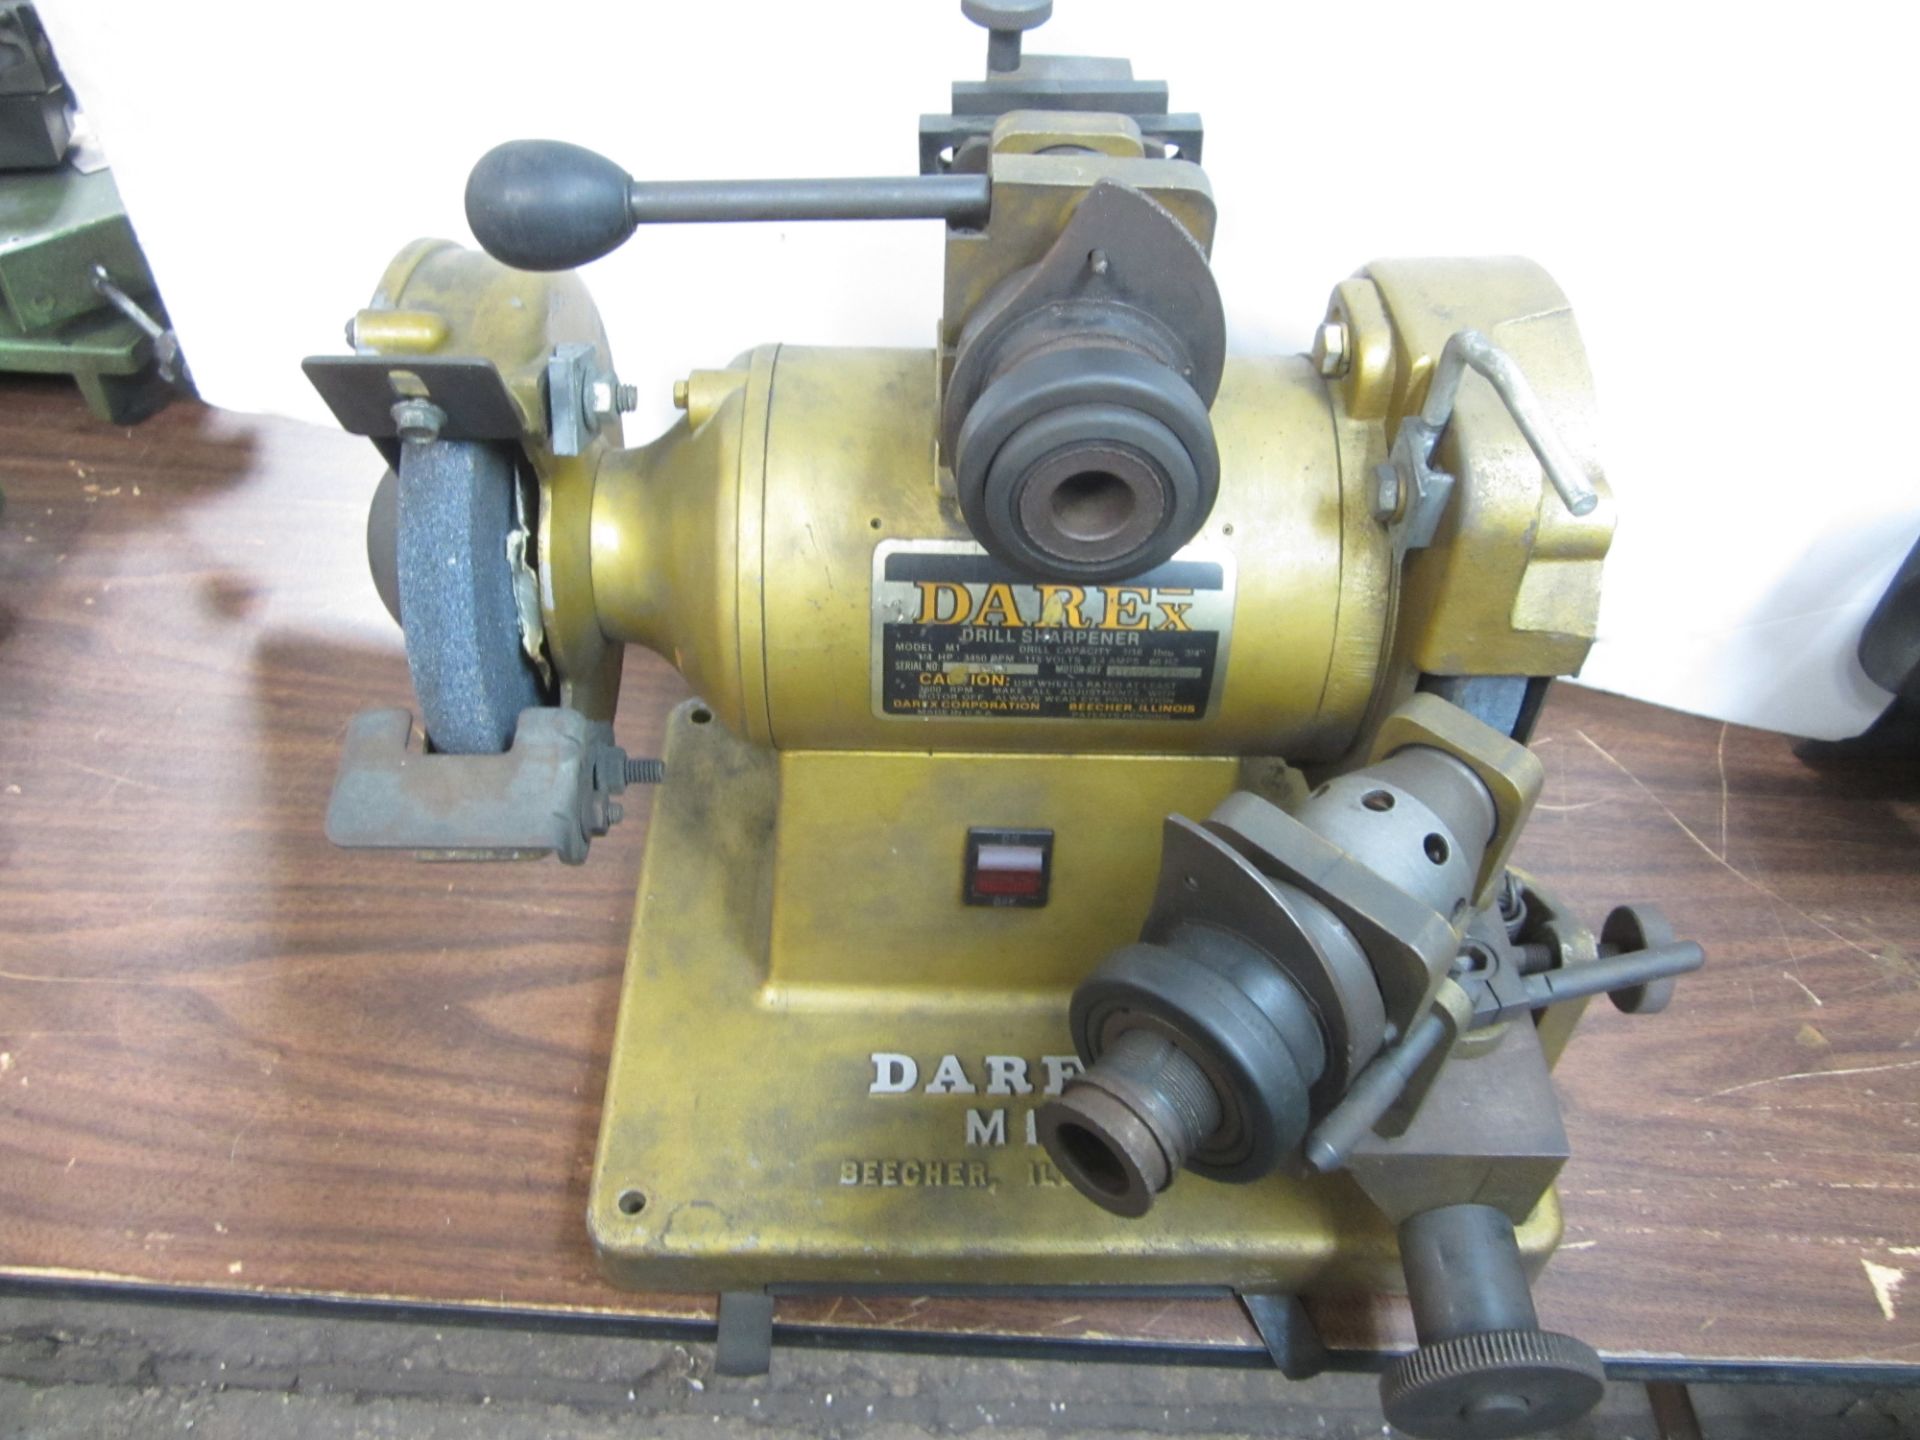 Darex Model M1 Bench Model Drill Sharpener, s/n 1003, 110/1/60 AC Electrics